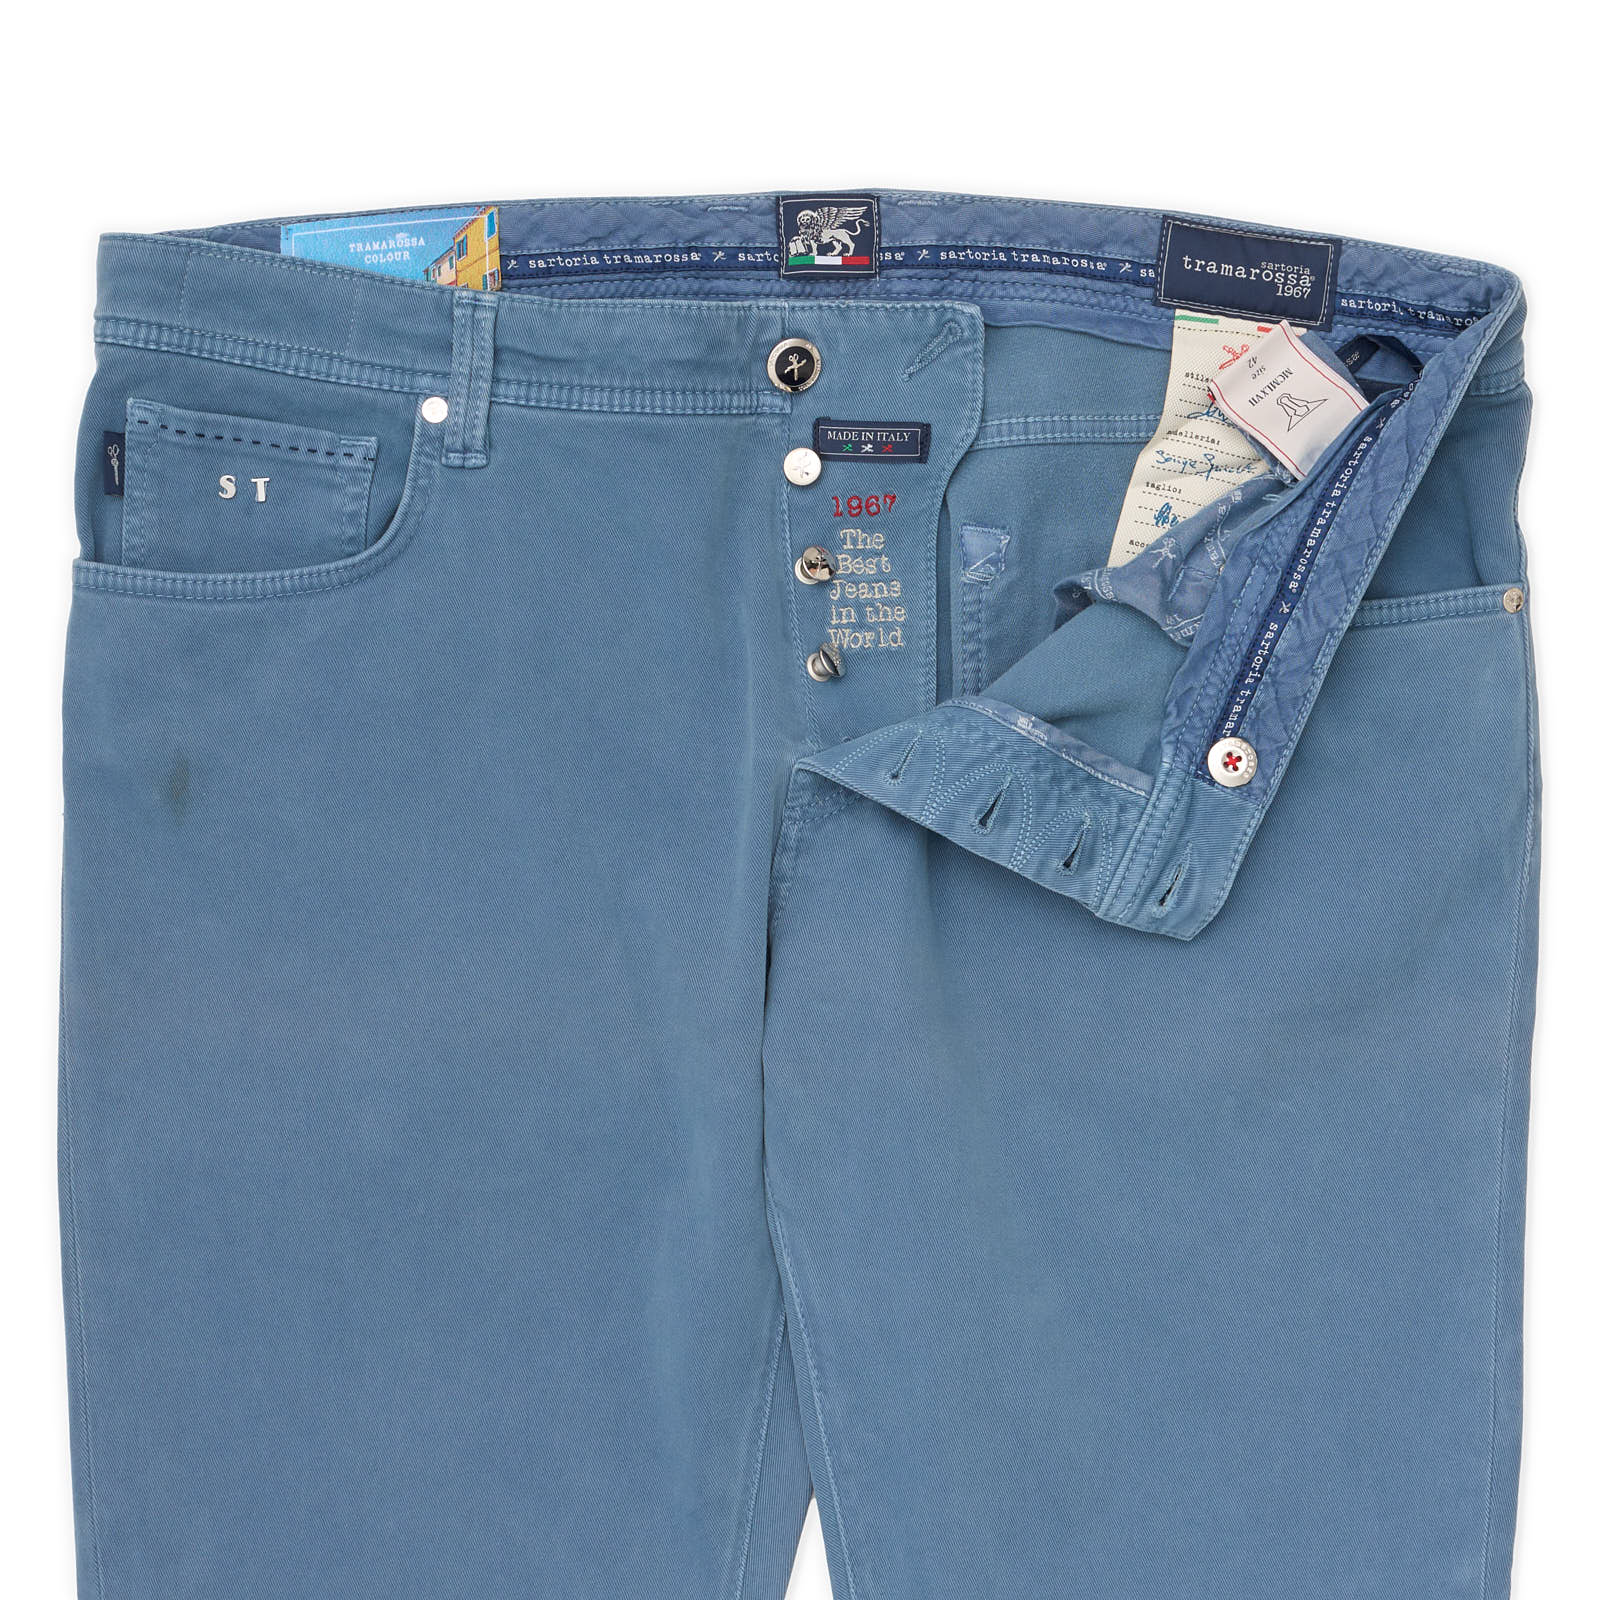 TRAMAROSSA "Leonardo" Washed Blue Cotton Stretch Slim Fit Jeans NEW US 42